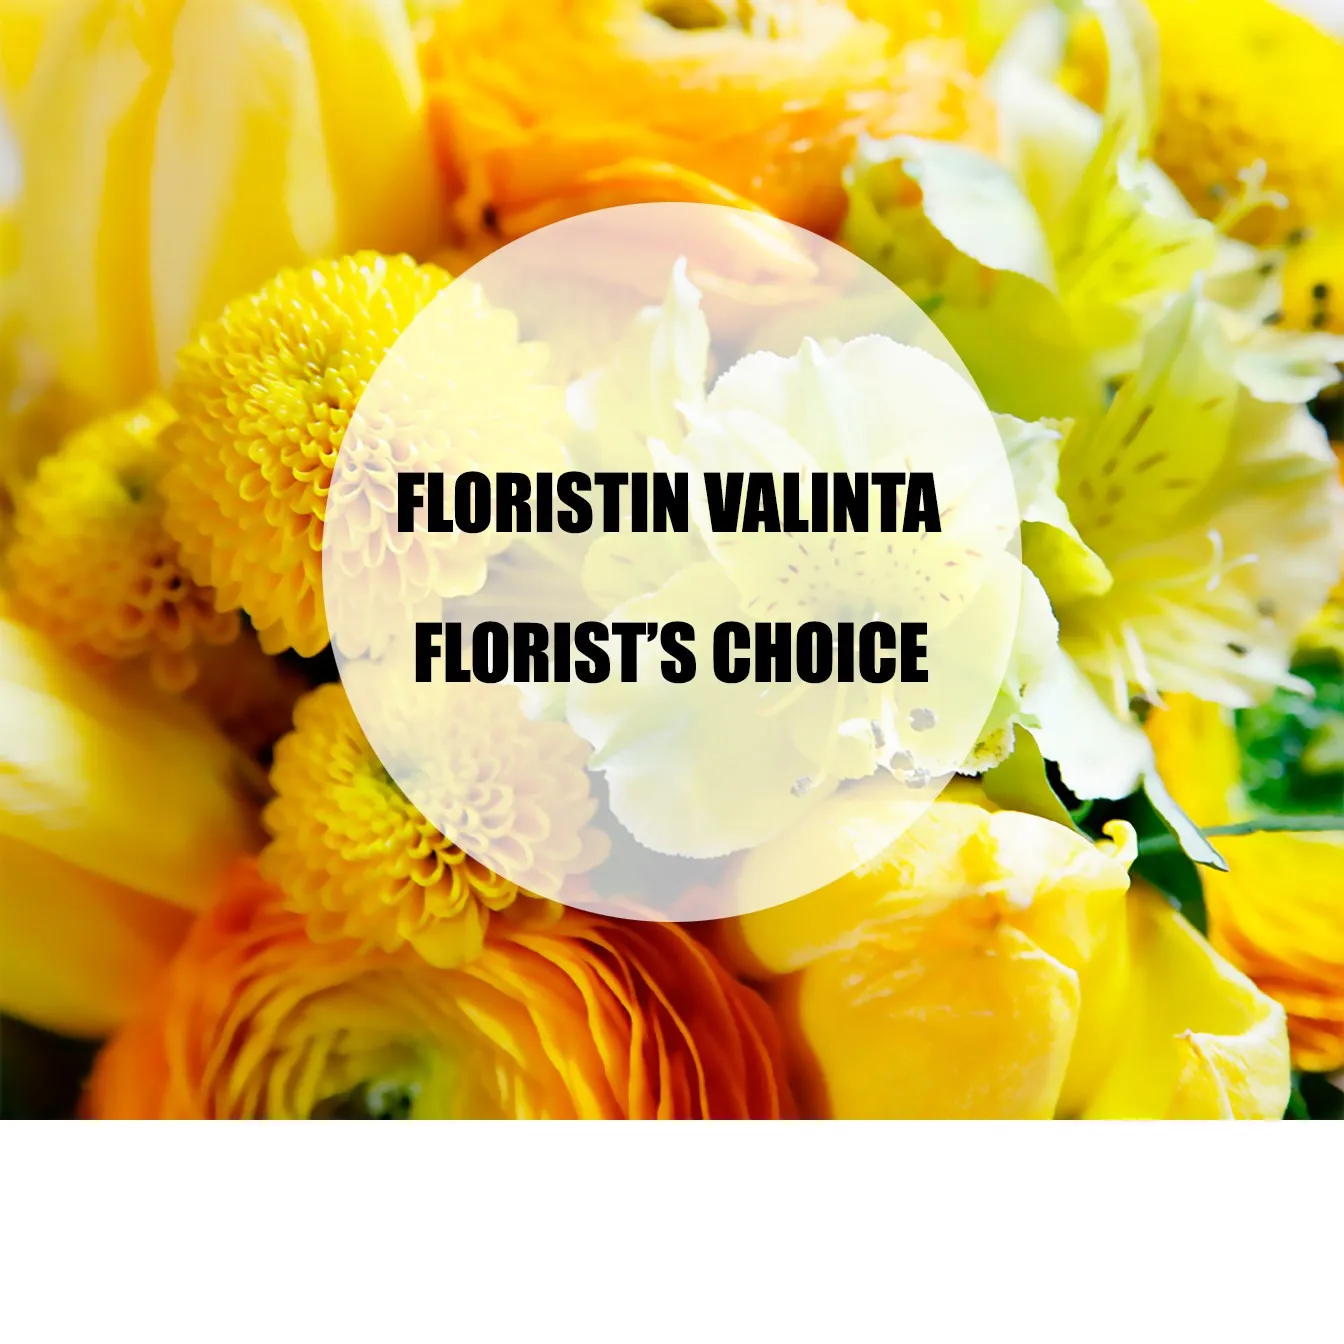 Florist's Choice in yellow - Finlandia